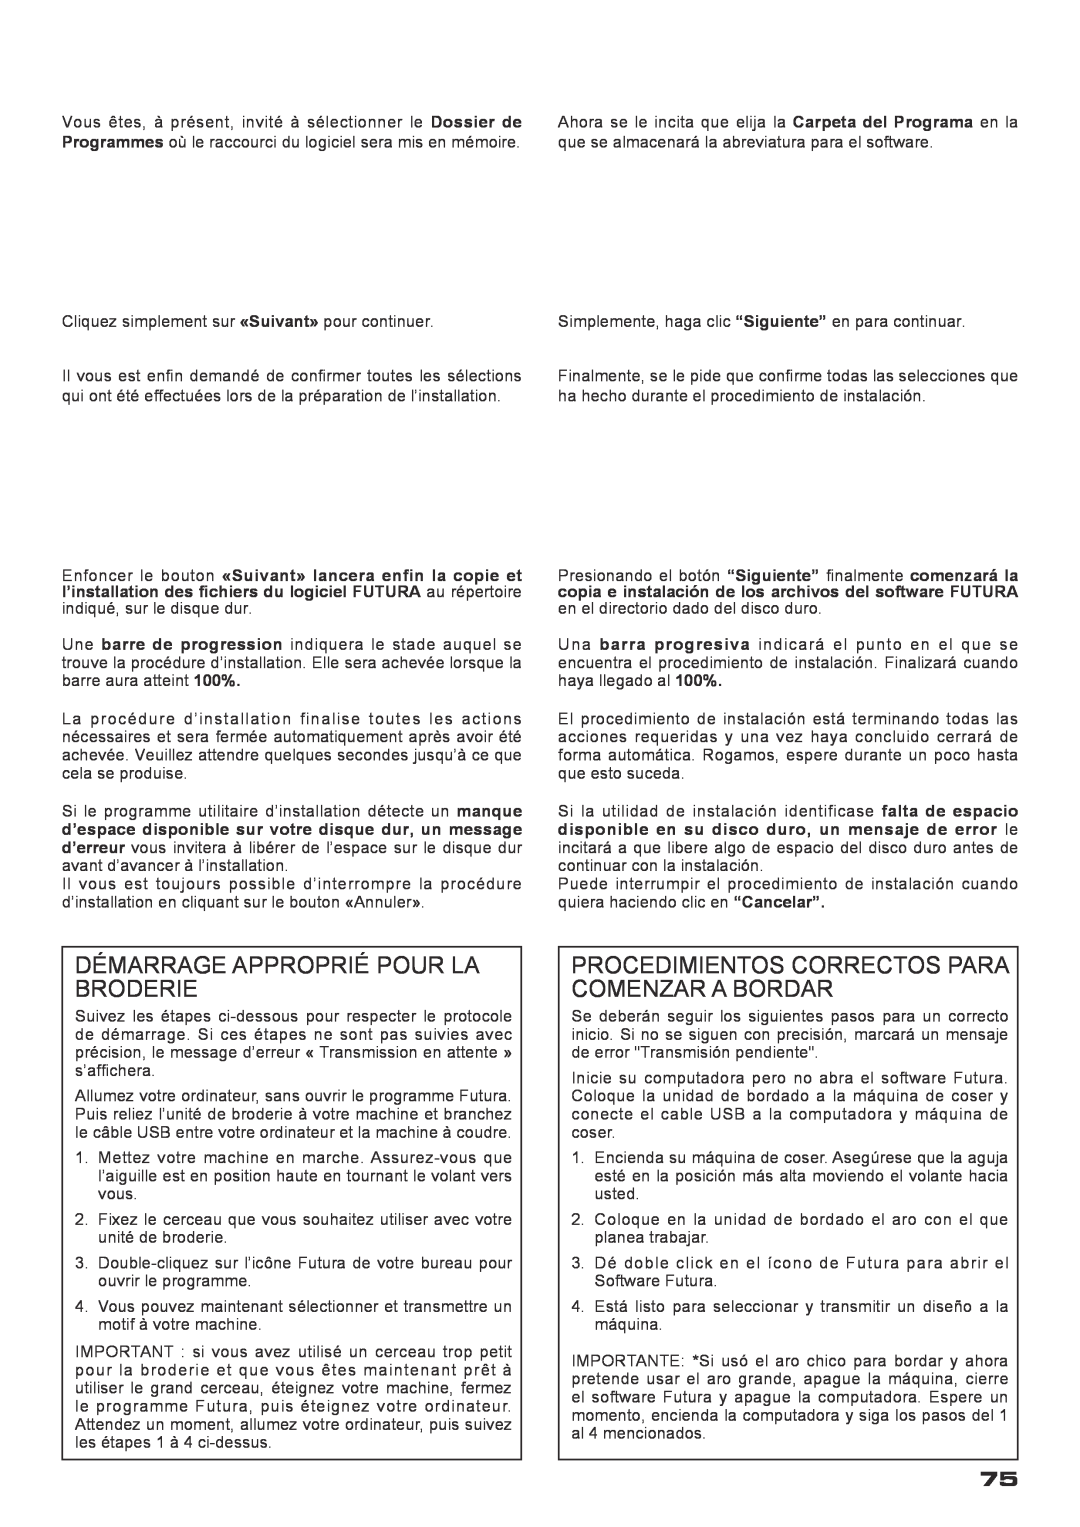 Singer XL-400 instruction manual Démarrage Approprié Pour La Broderie, Procedimientos Correctos Para Comenzar A Bordar 